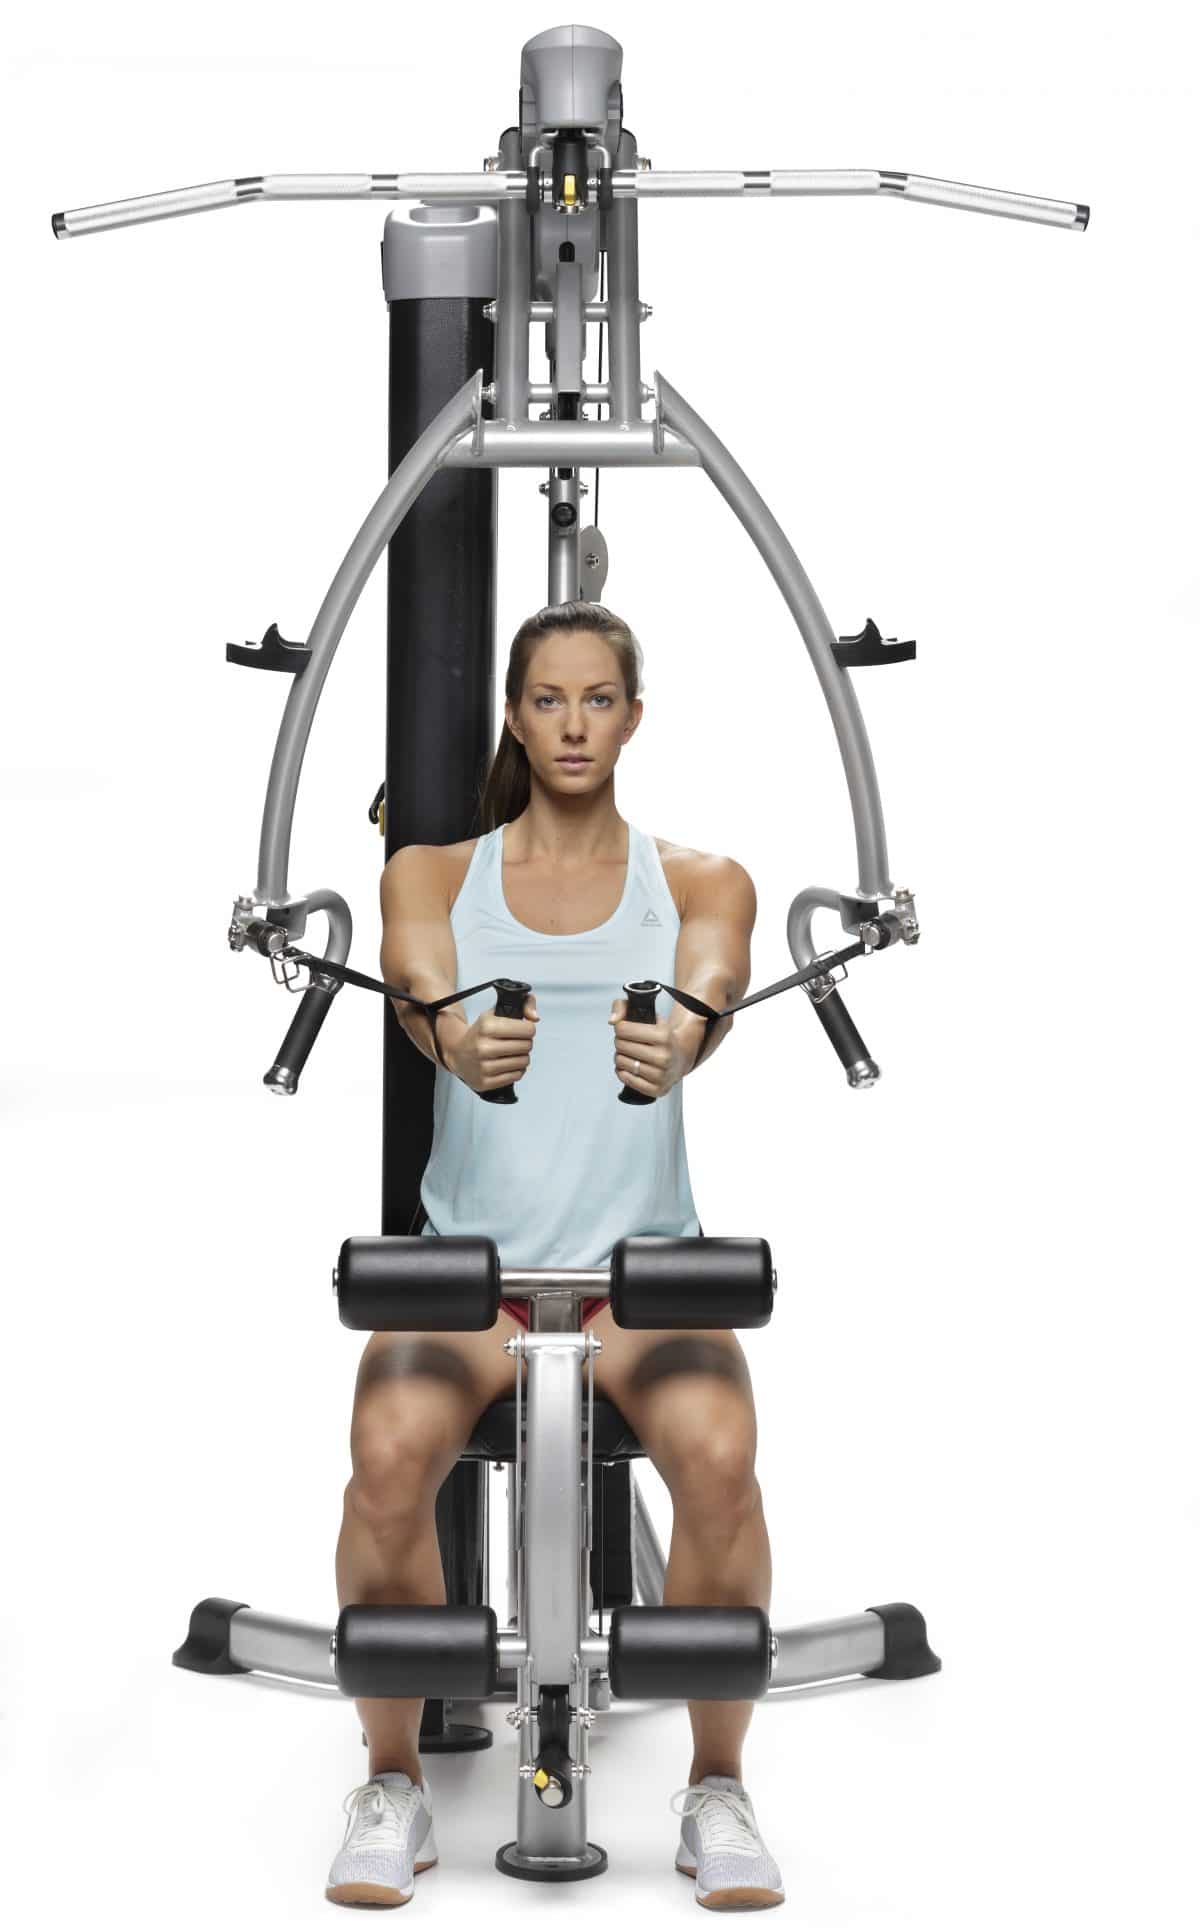 A woman is sitting on a gym machine.